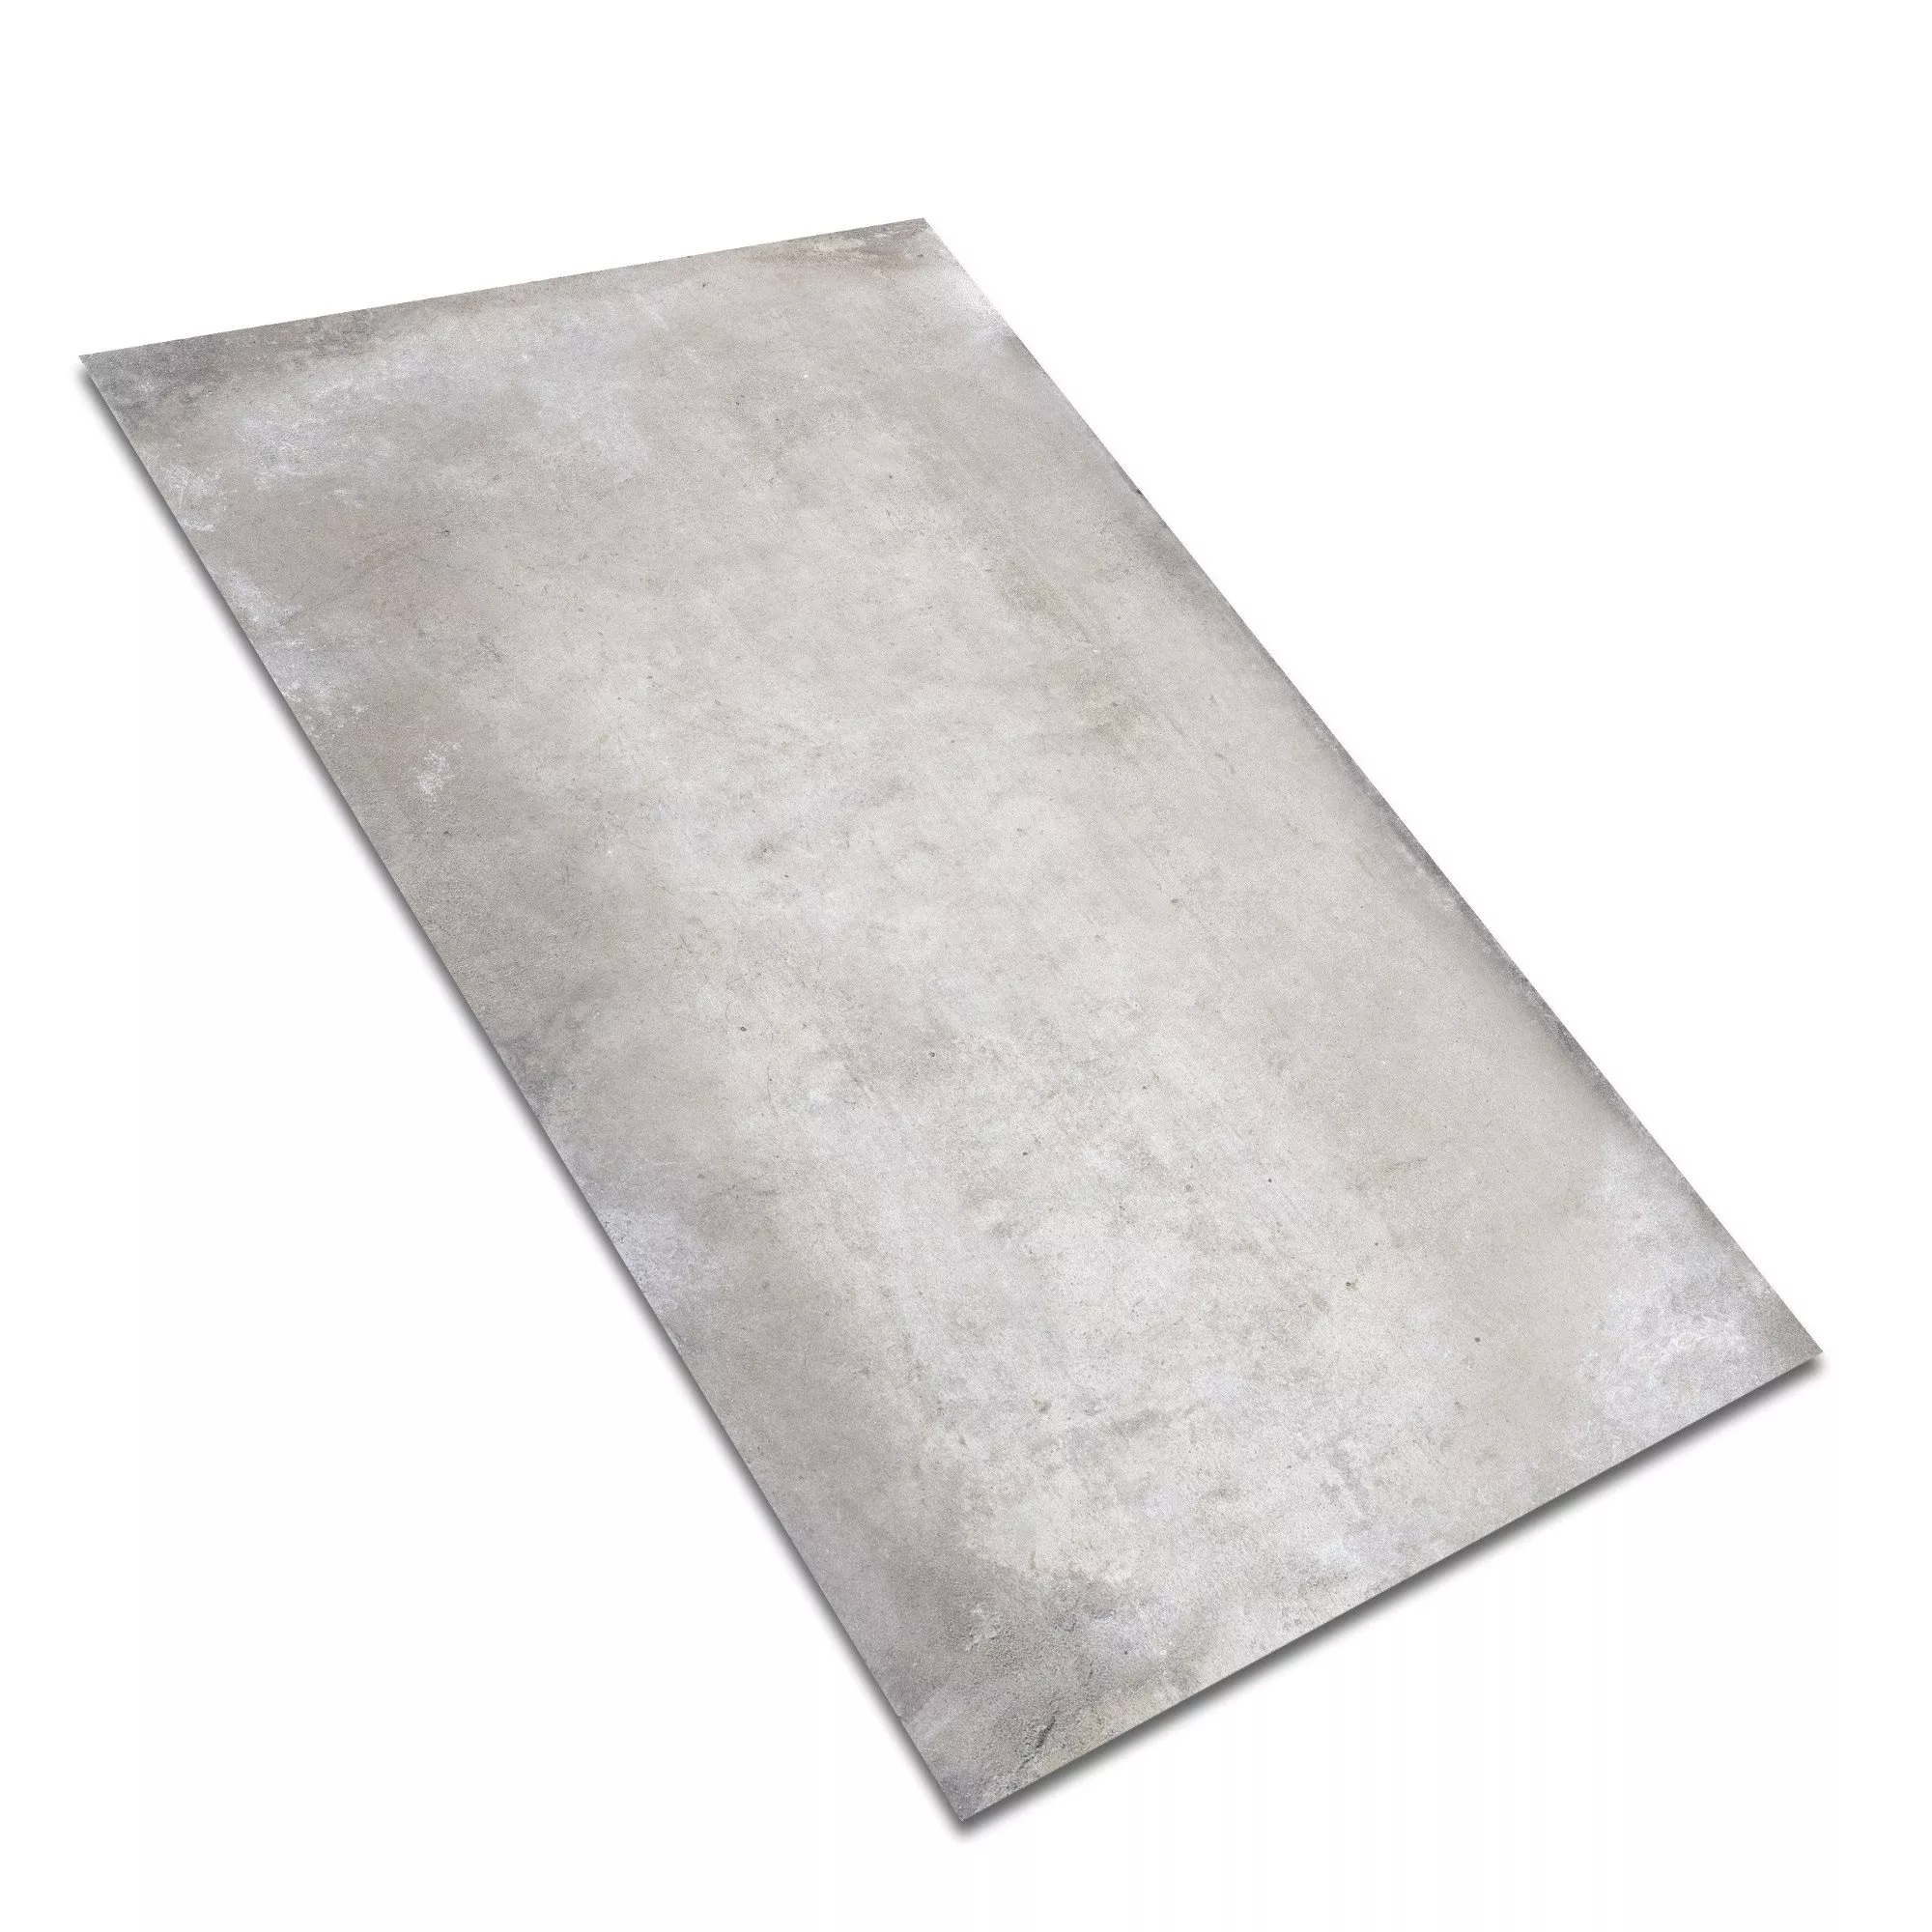 Sample Vloertegels Cement Optic Maryland Grijs 30x60cm